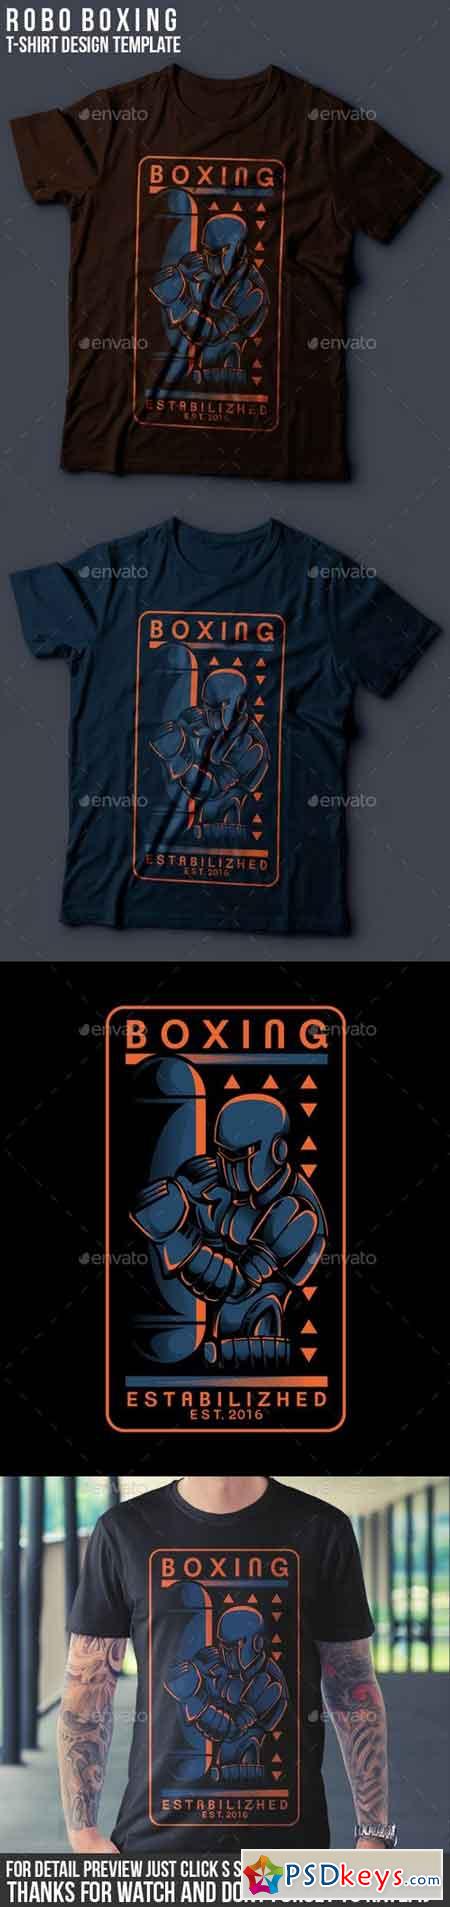 Robo Boxing T-Shirt Design 18532012